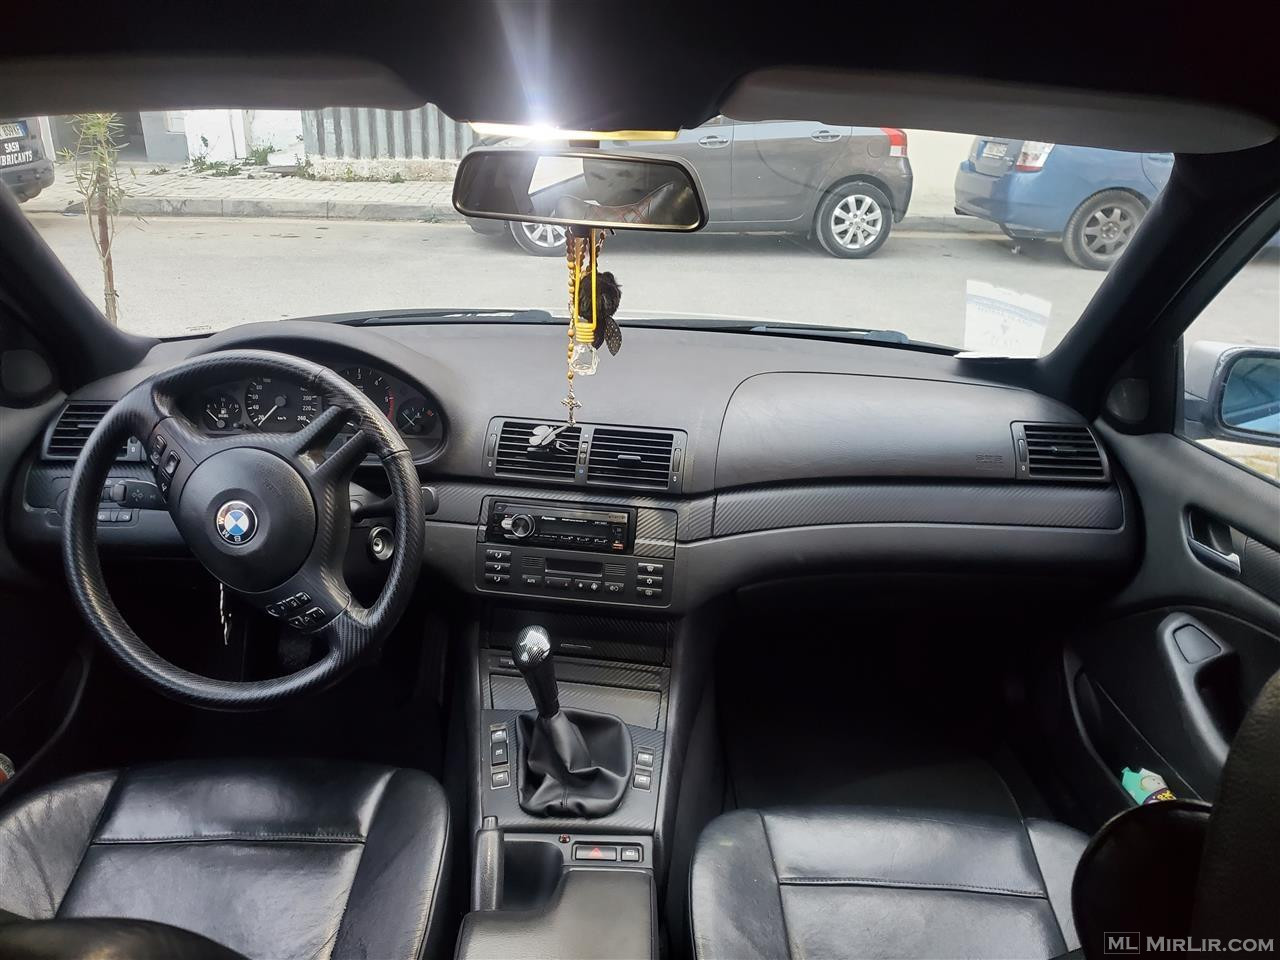 BMW 320 cmimi i diskutushm